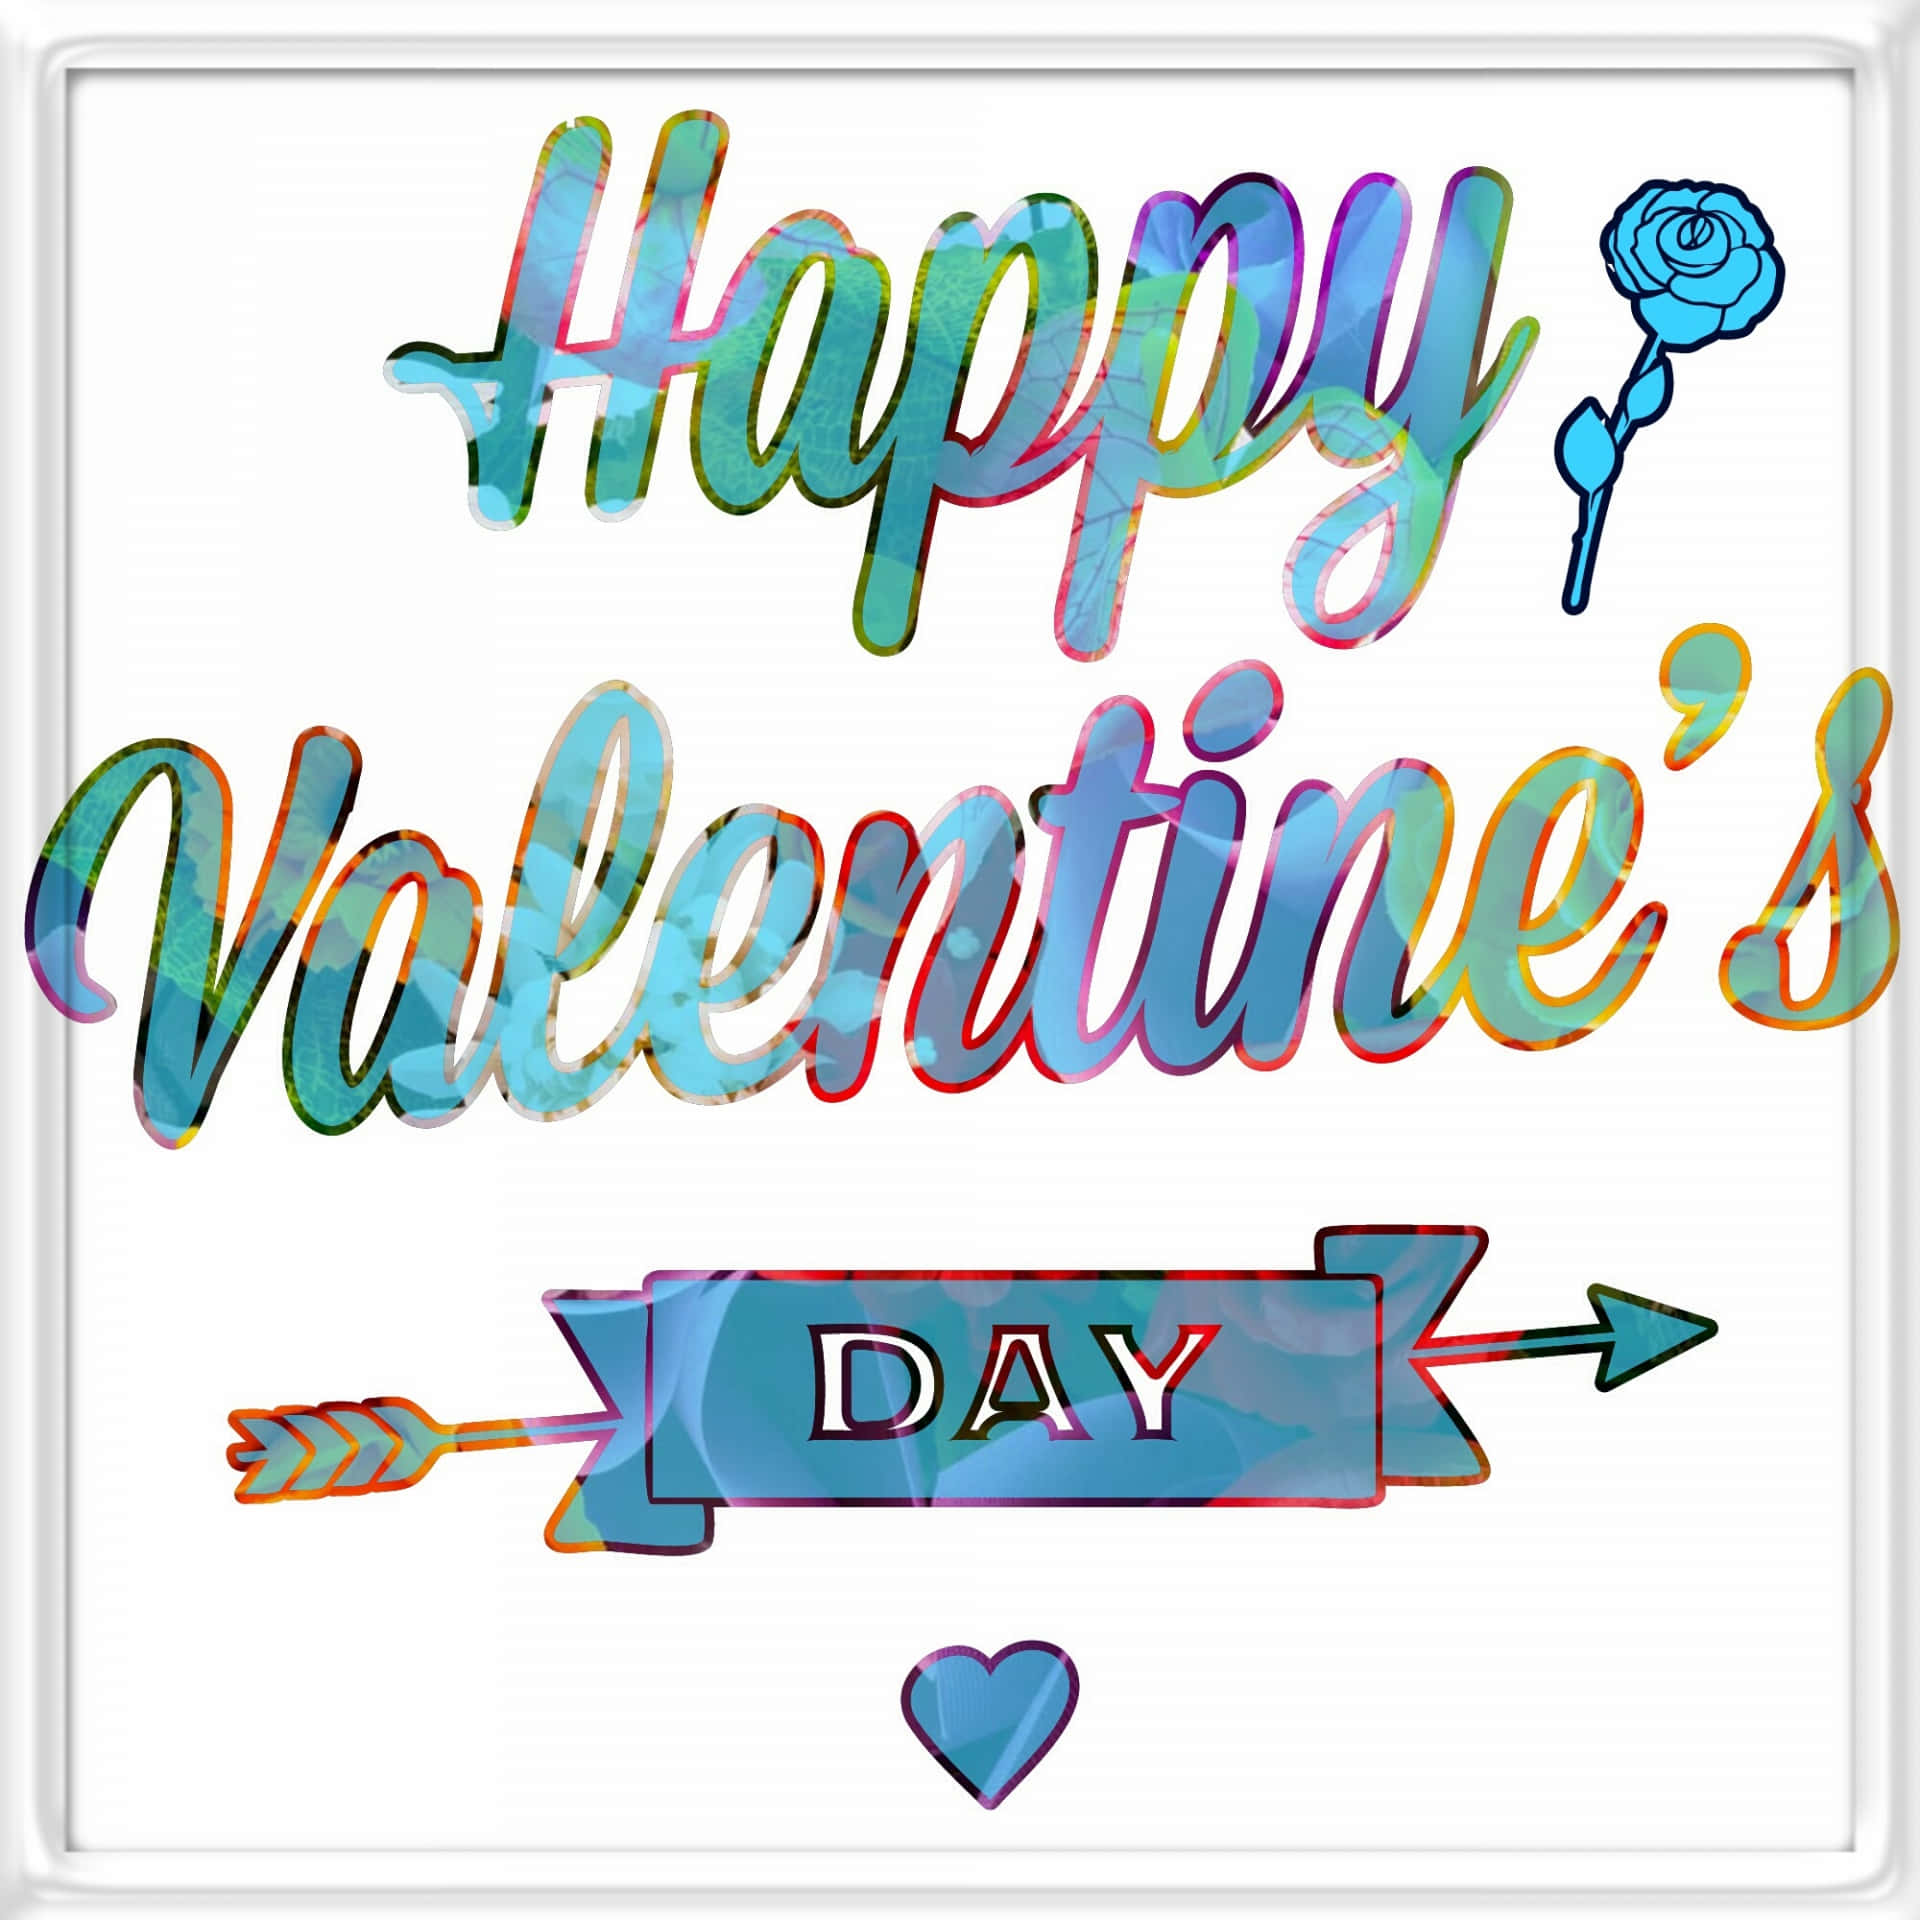 Celebrate Love this Valentine's Day